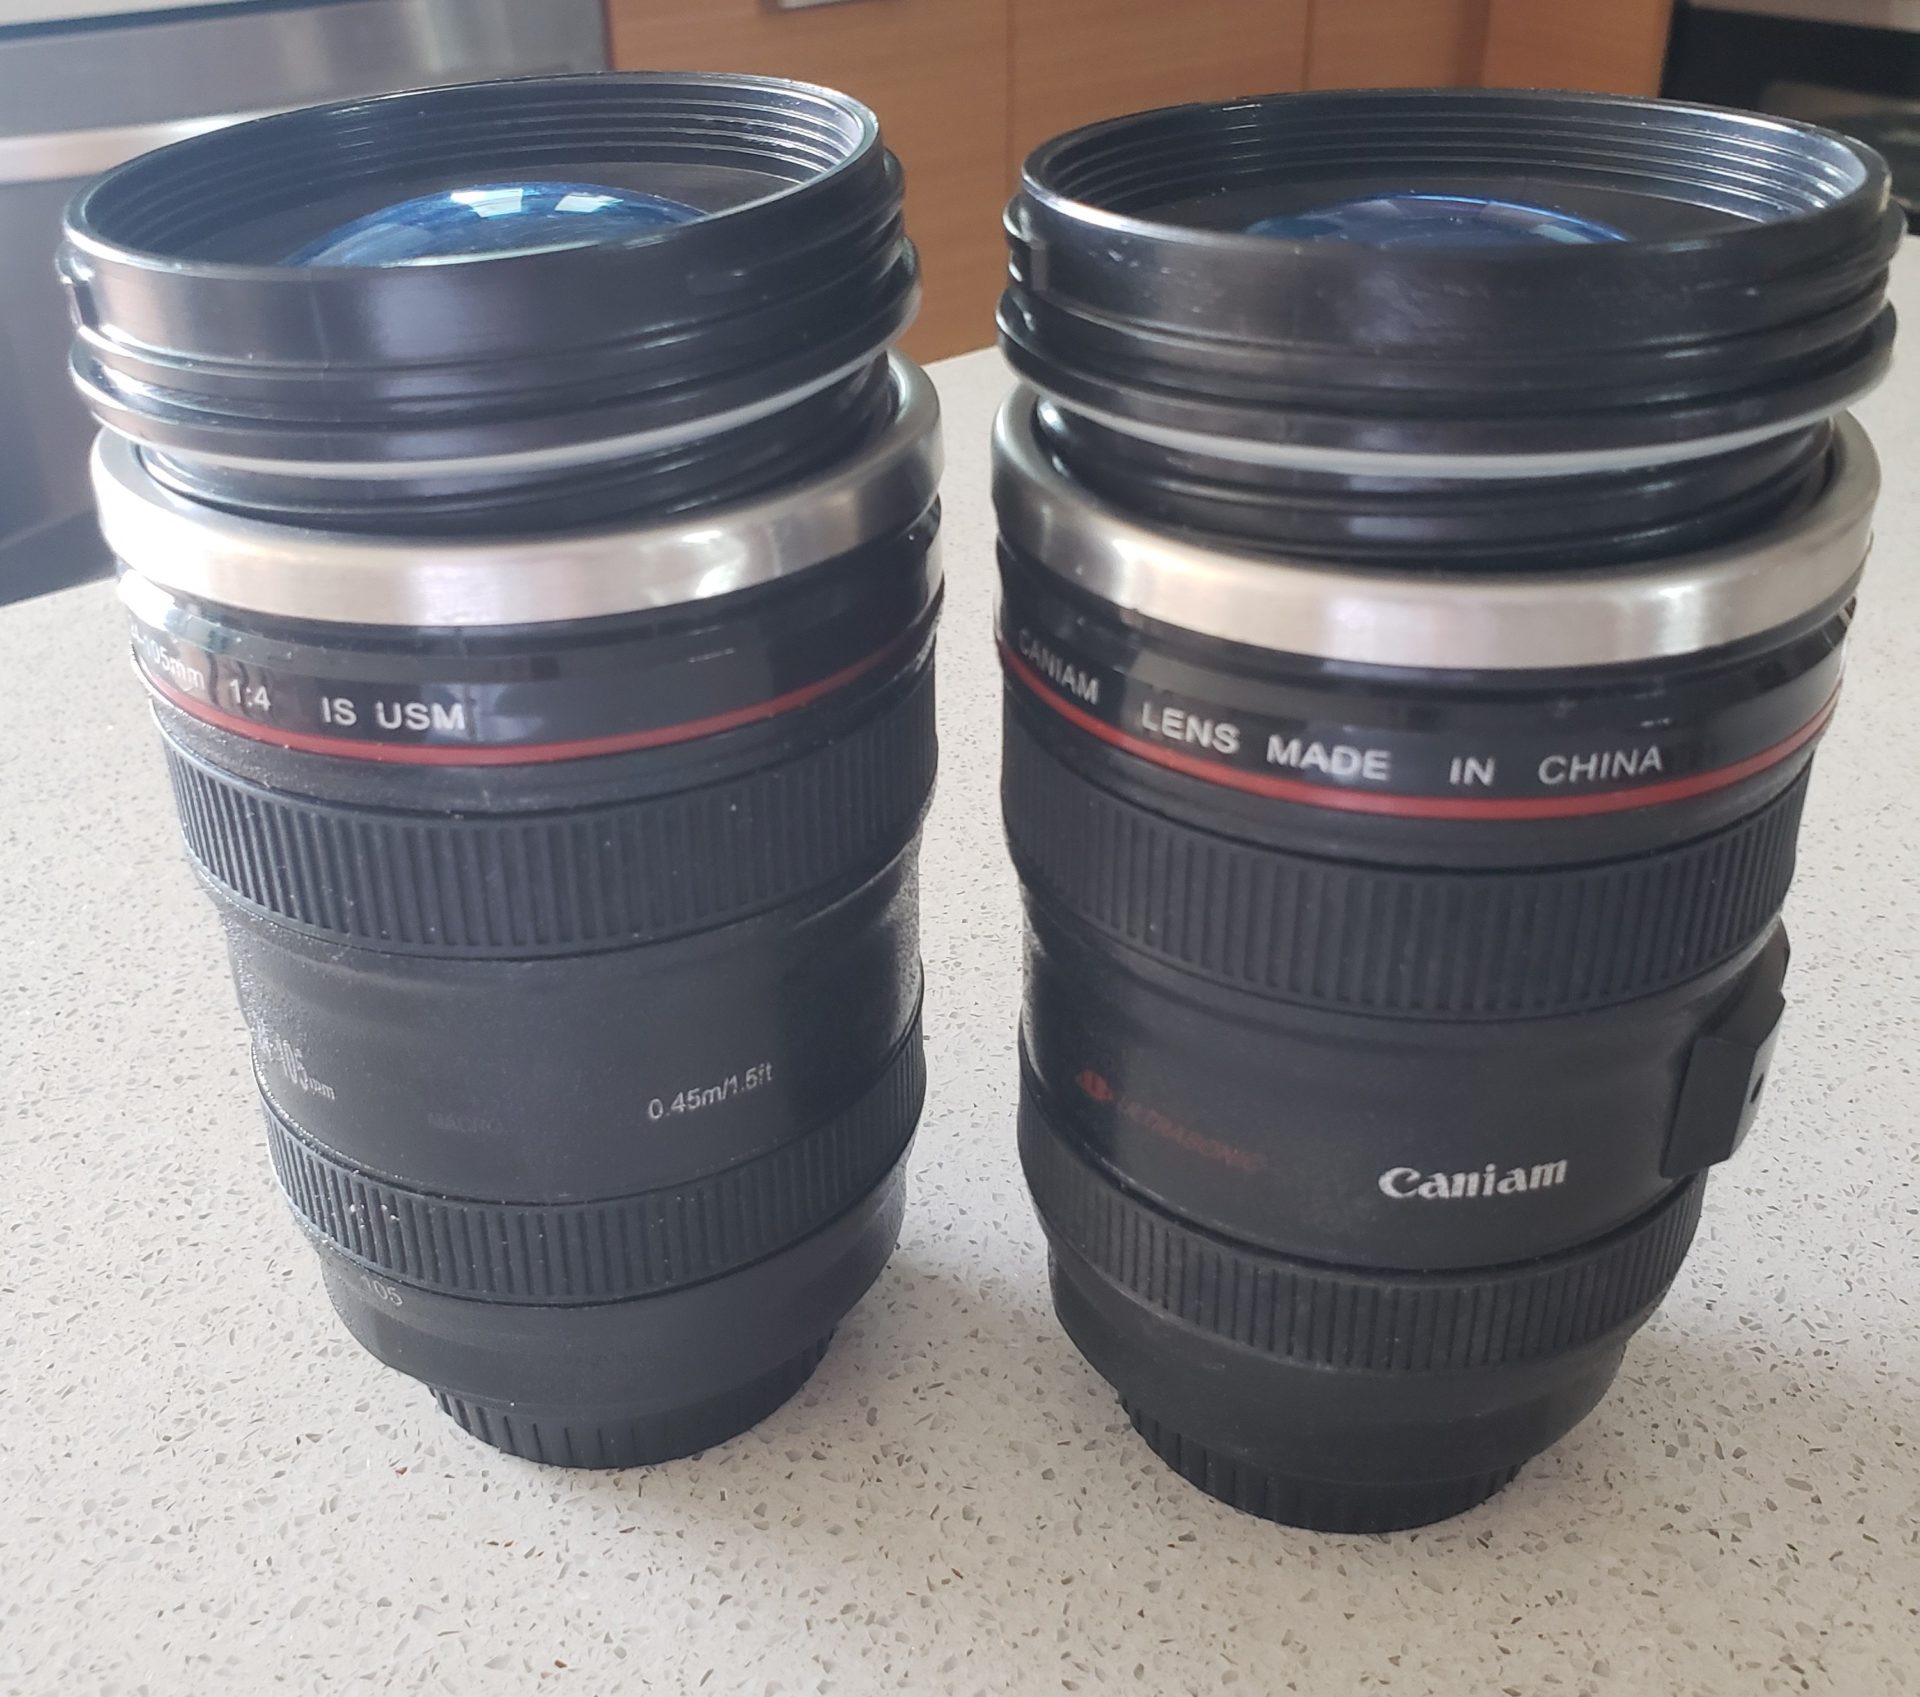 a couple of camera lenses